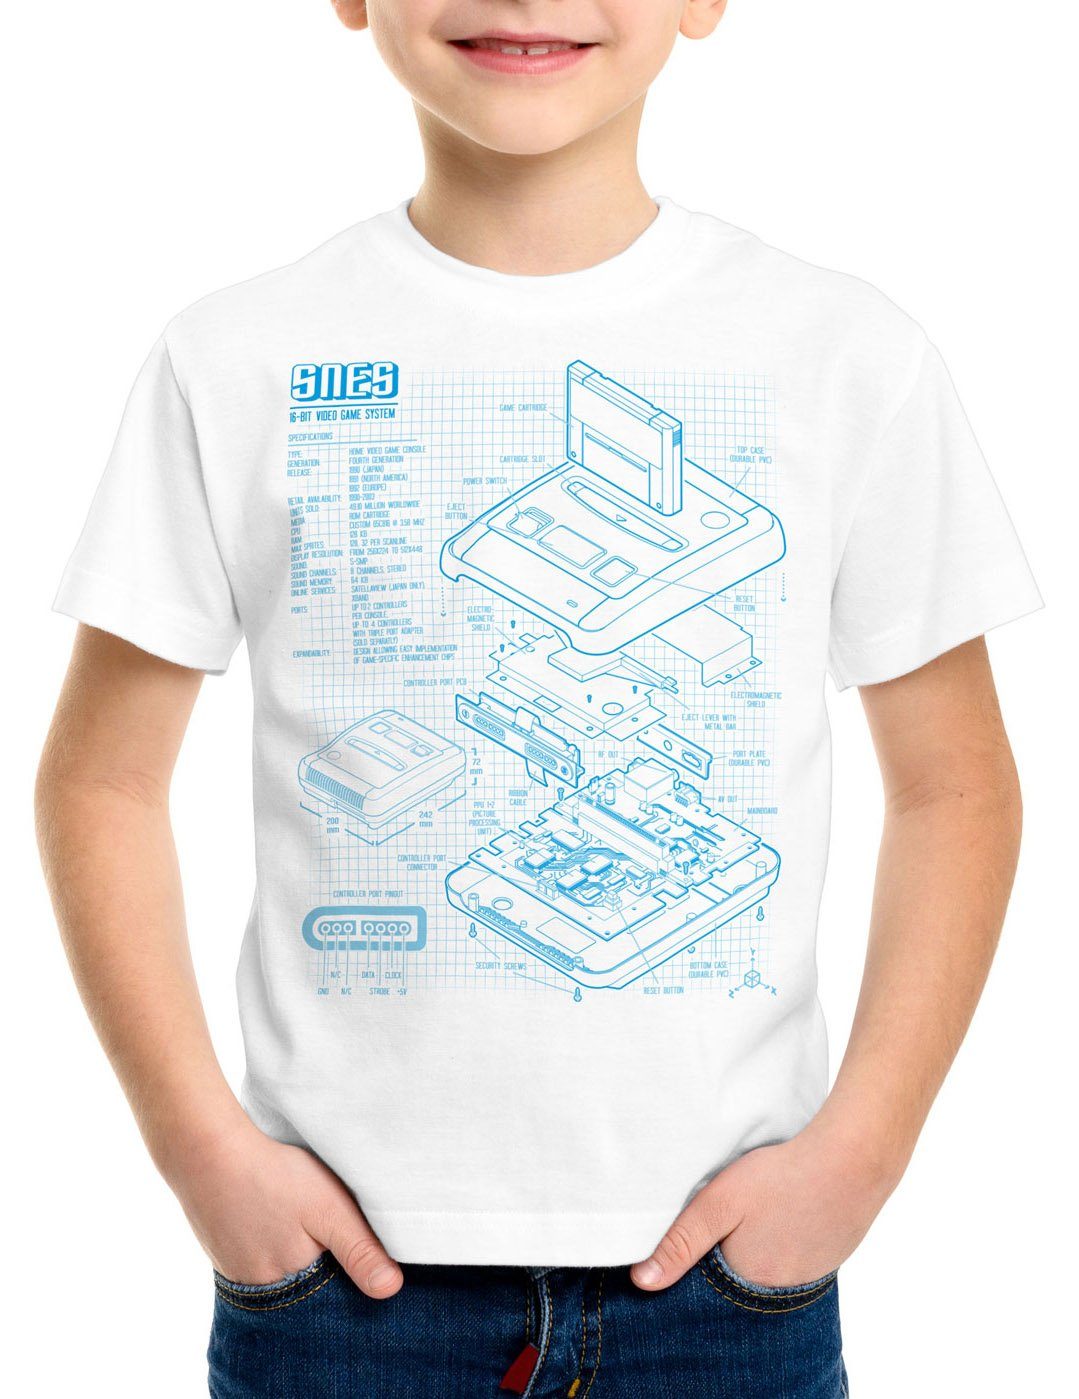 【Billig】 style3 Print-Shirt Kinder T-Shirt 16-Bit weiß Videospiel Blaupause SNES